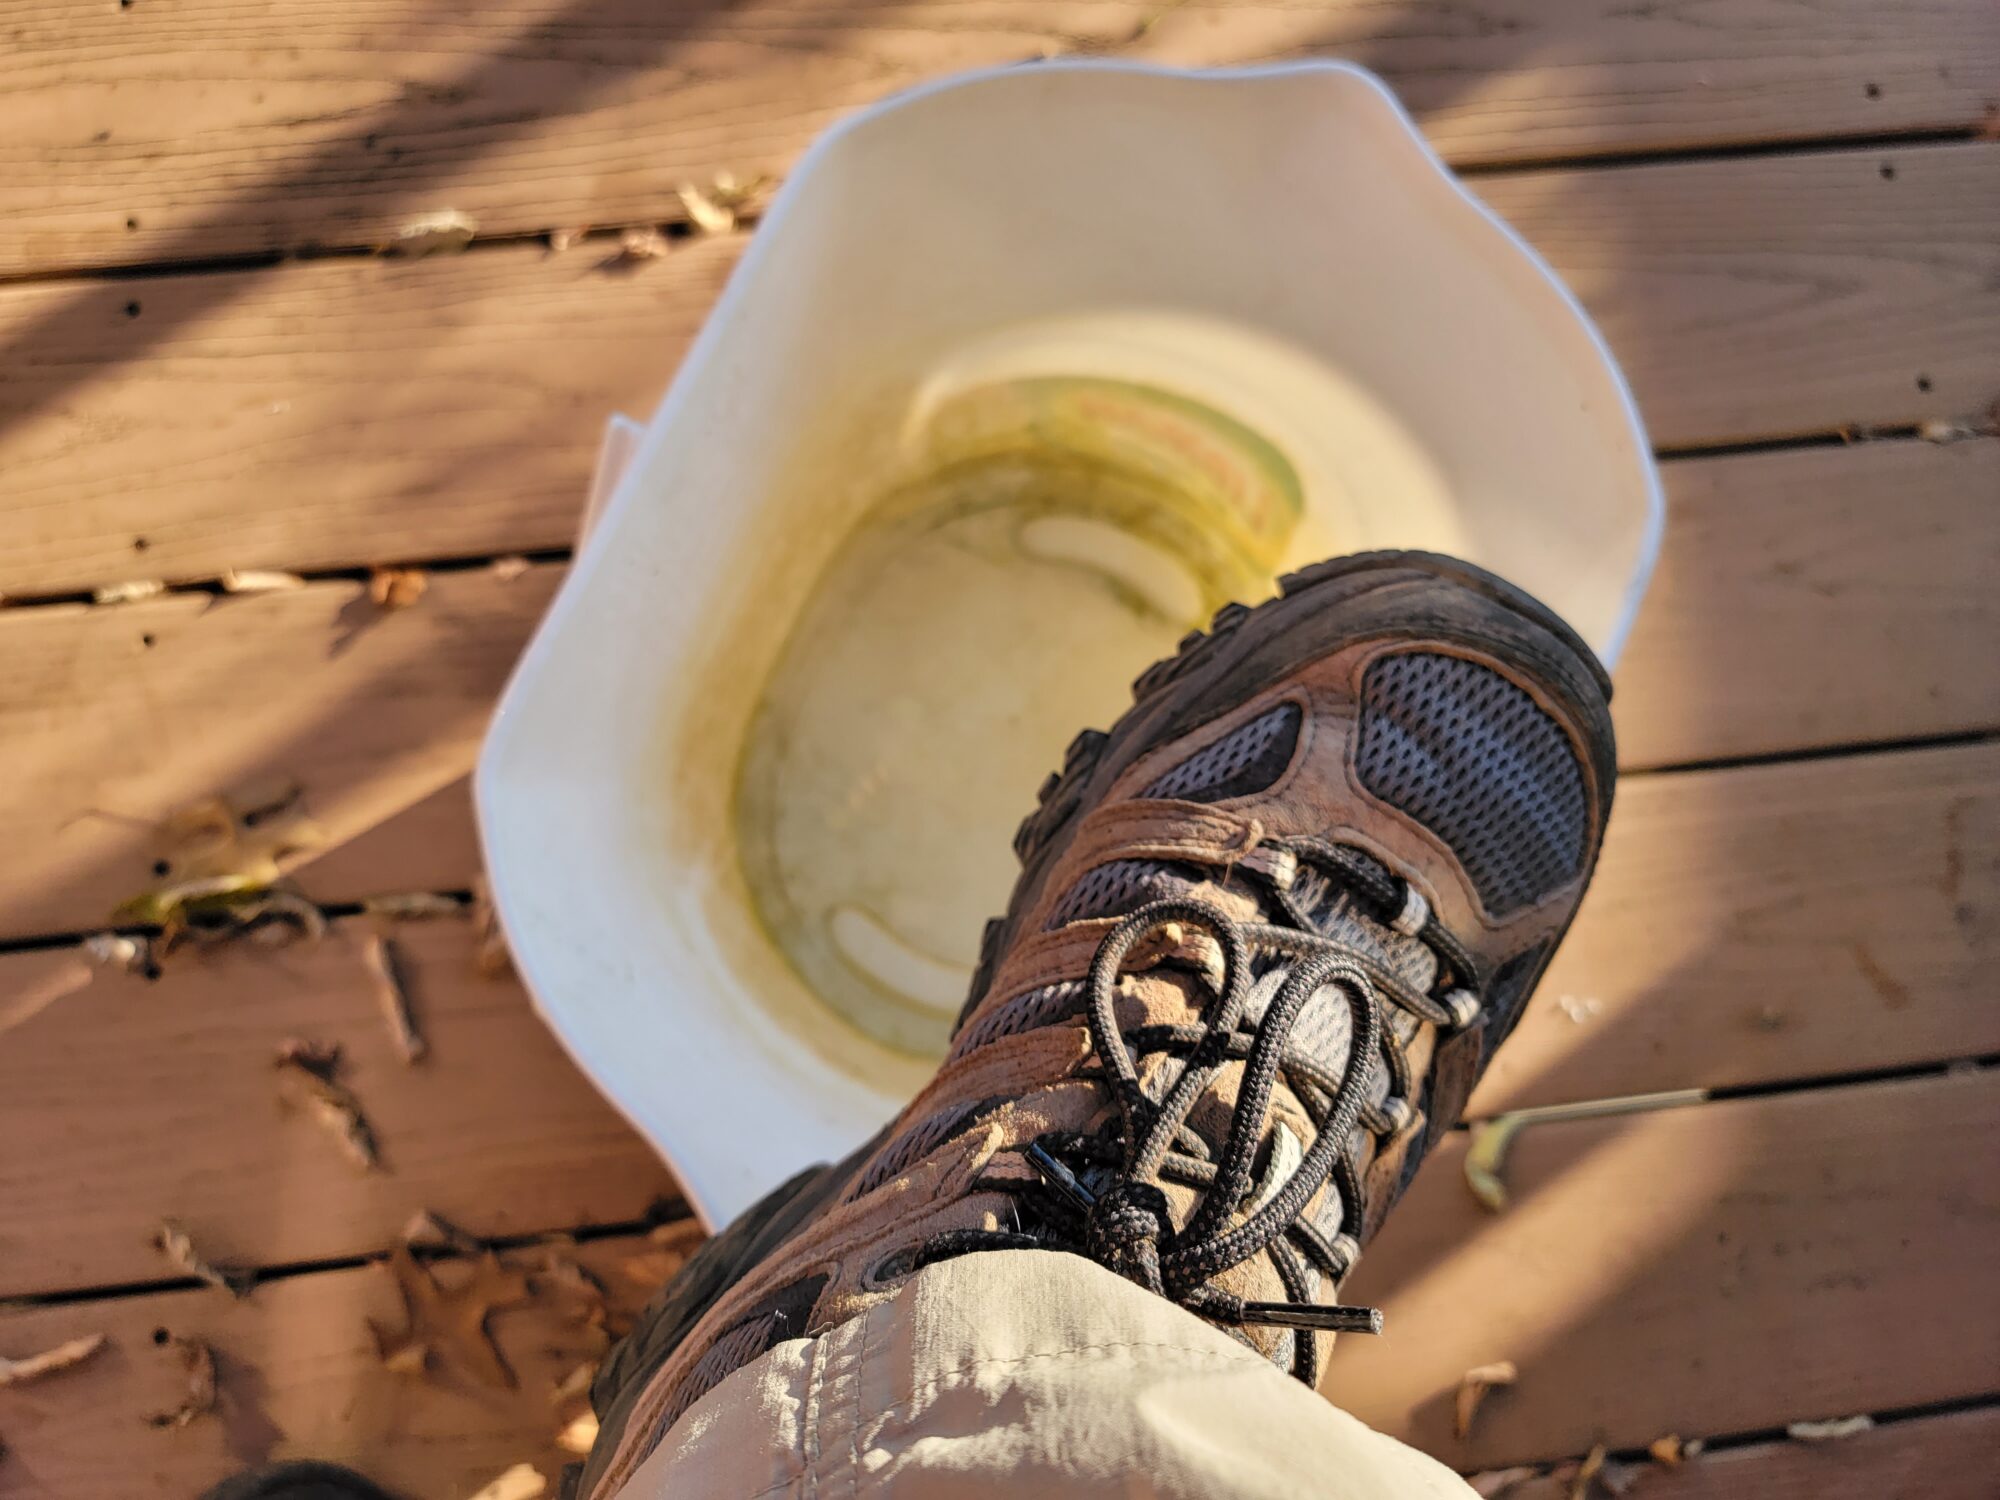 Merrell shoes waterproof test